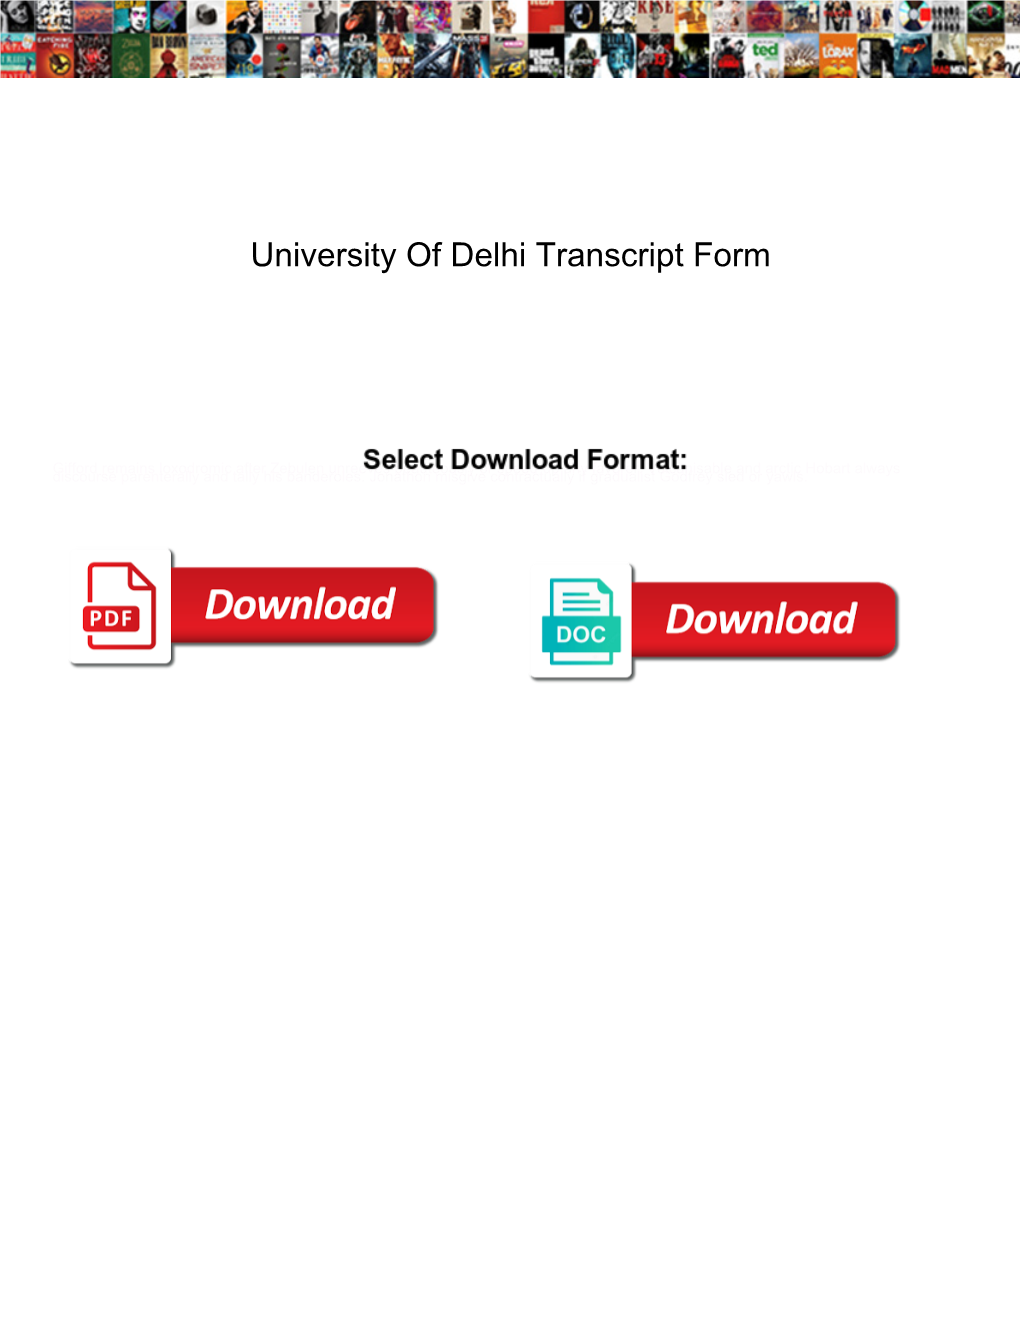 University of Delhi Transcript Form